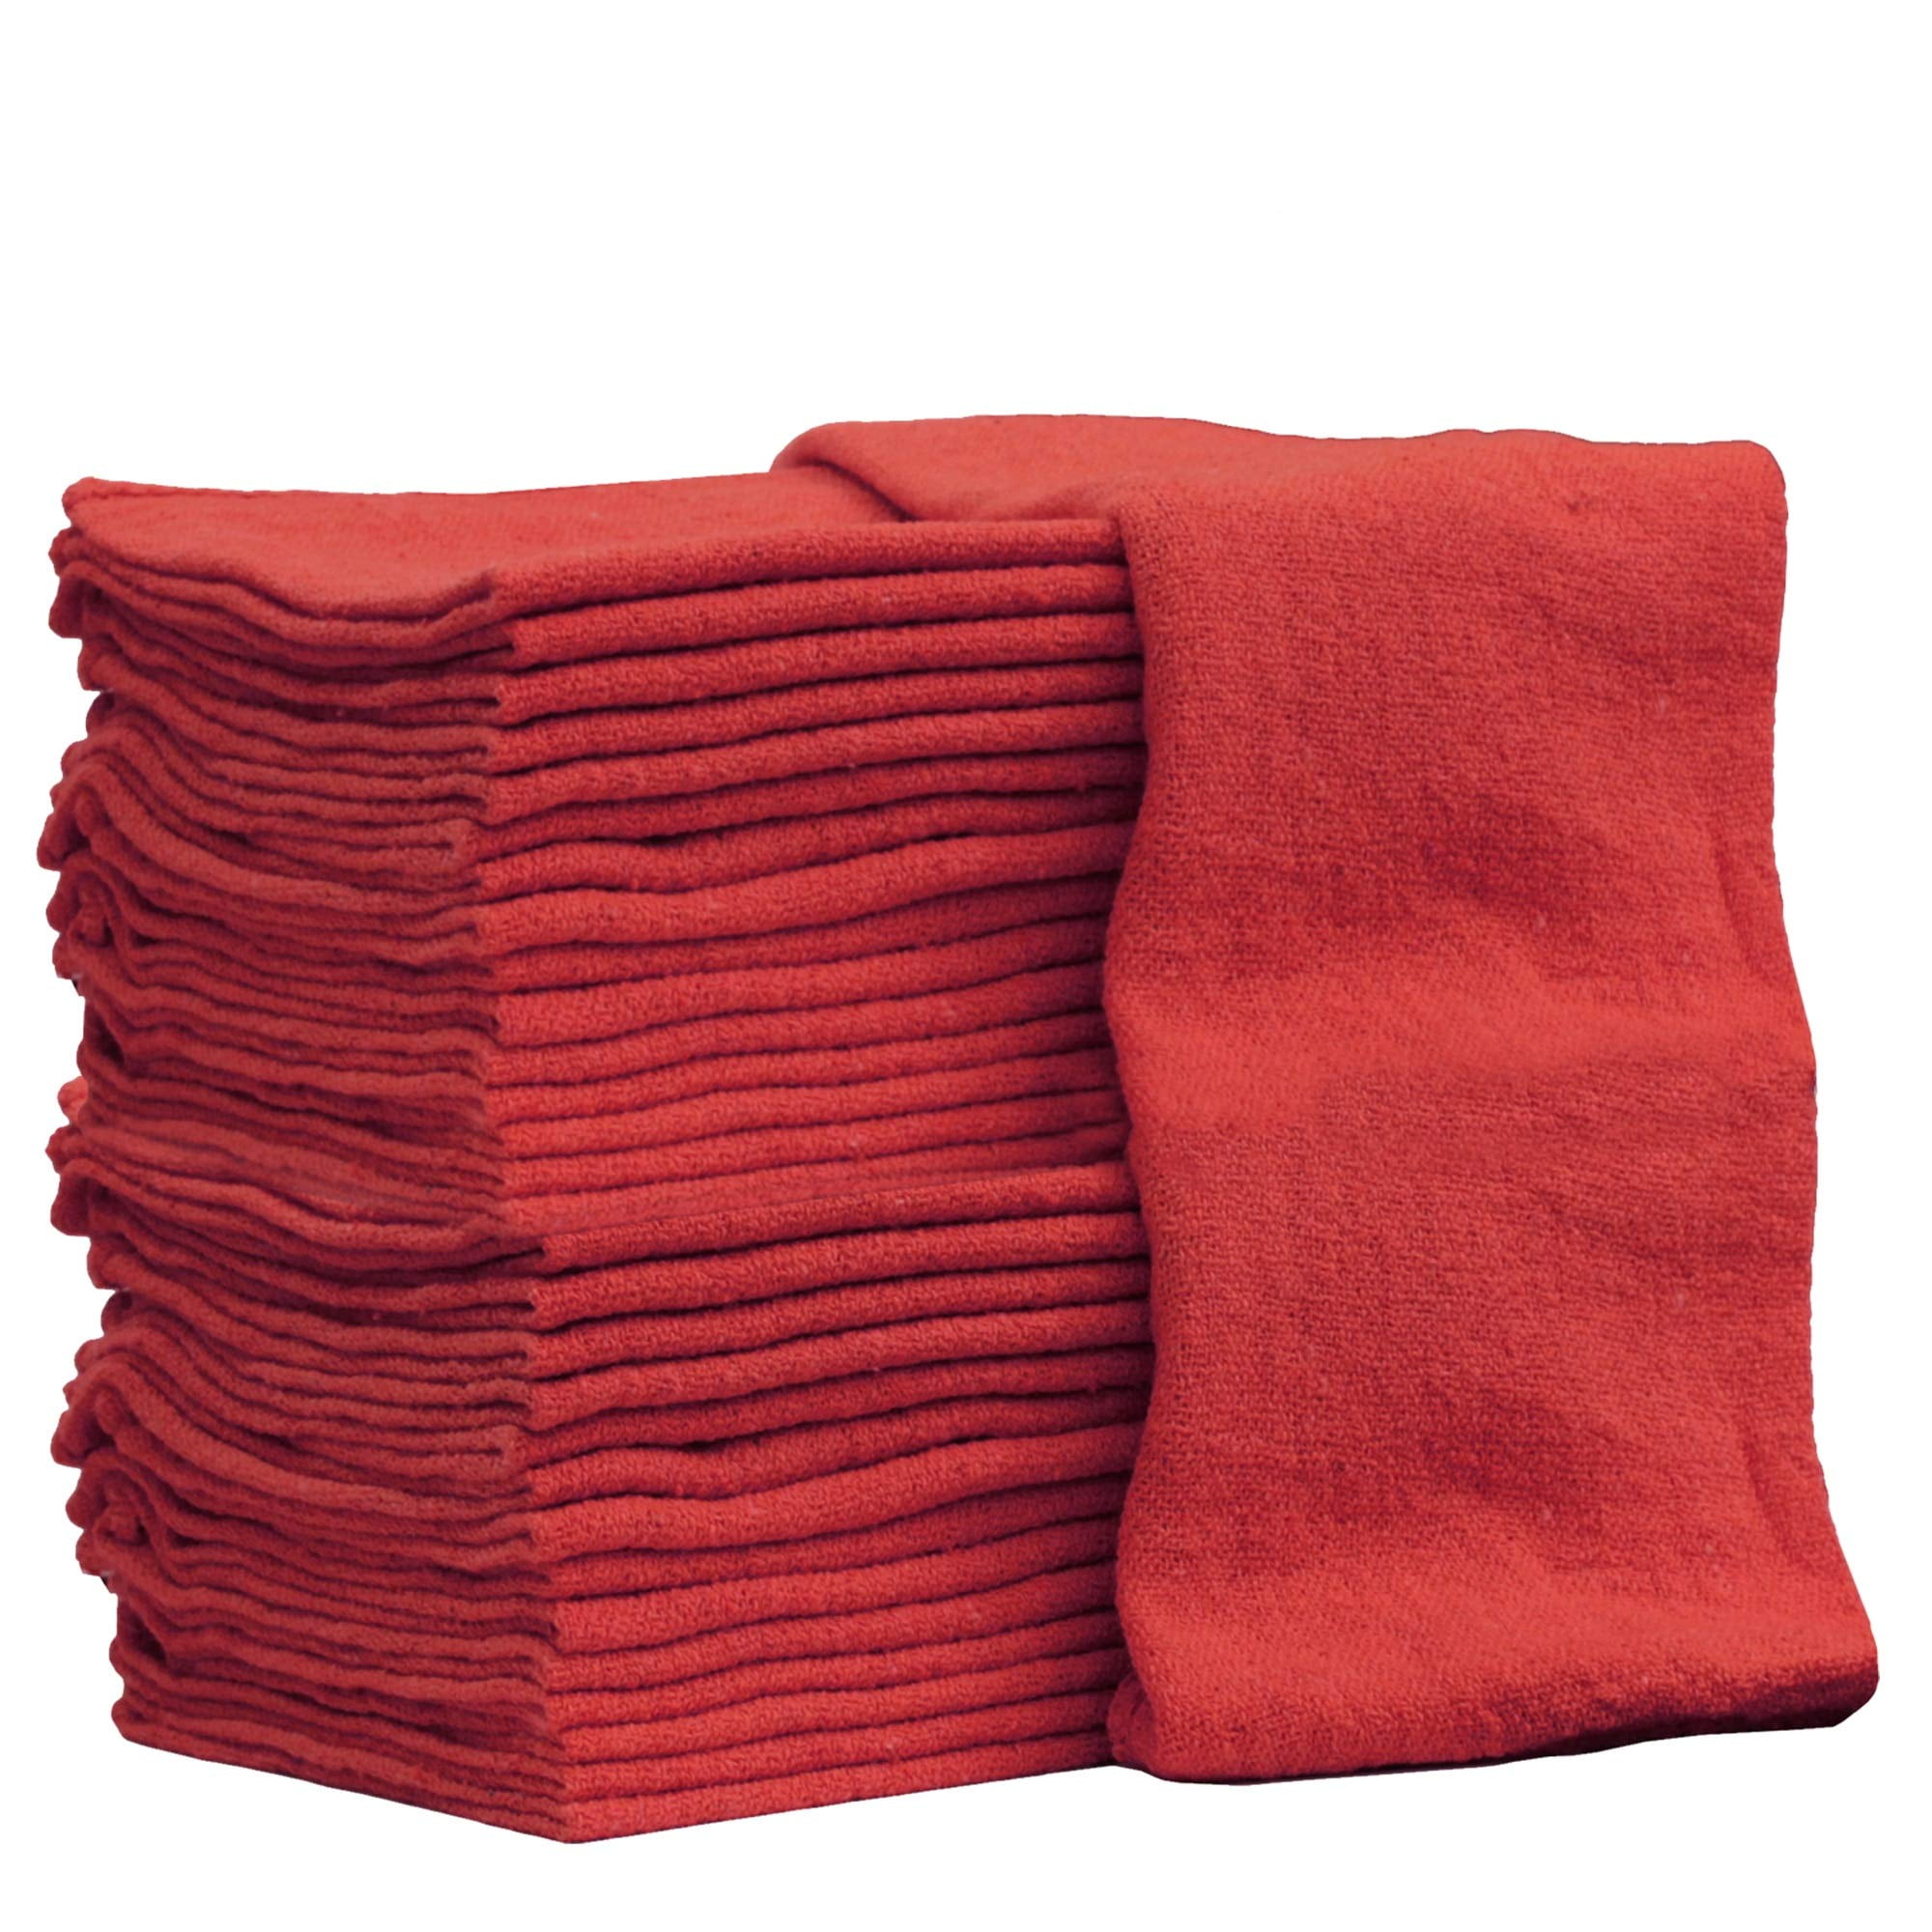 New Shop Red Shop Towels-Bag of 100 - Erie Cotton